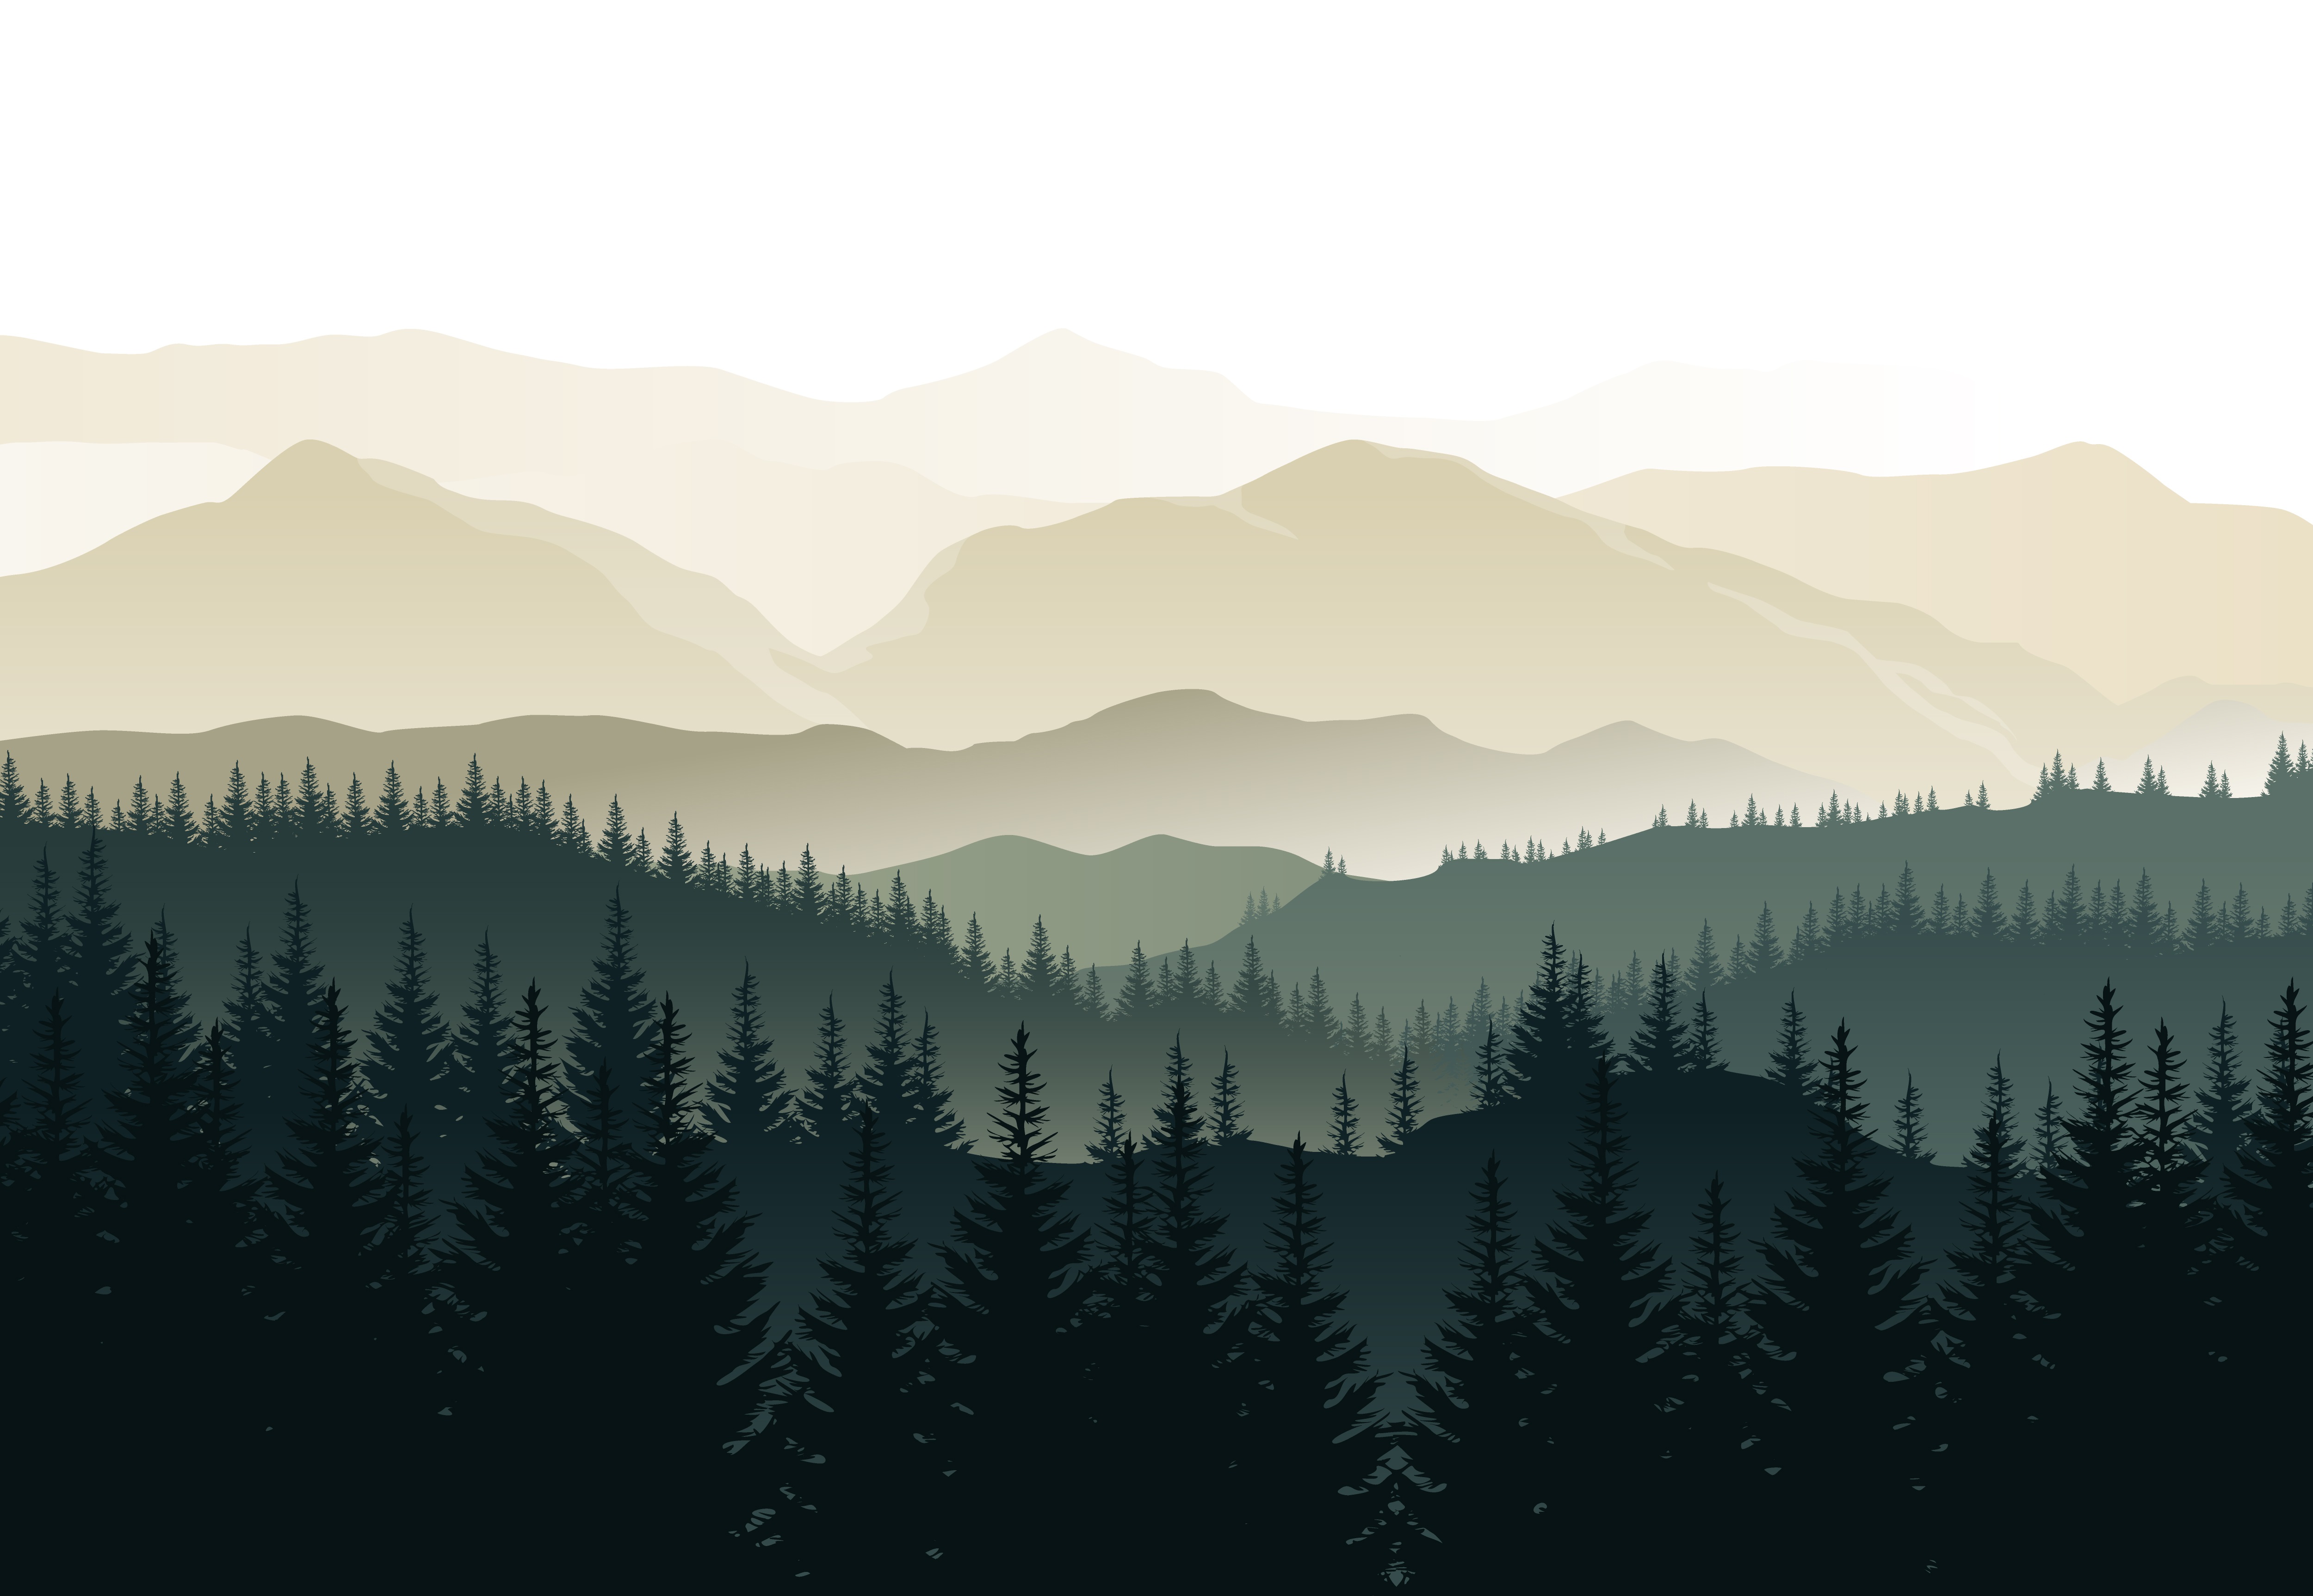 Forest Mountains Landscape Artwork Digital Art Hills Silhouette Mist Green Vector 5000x3450